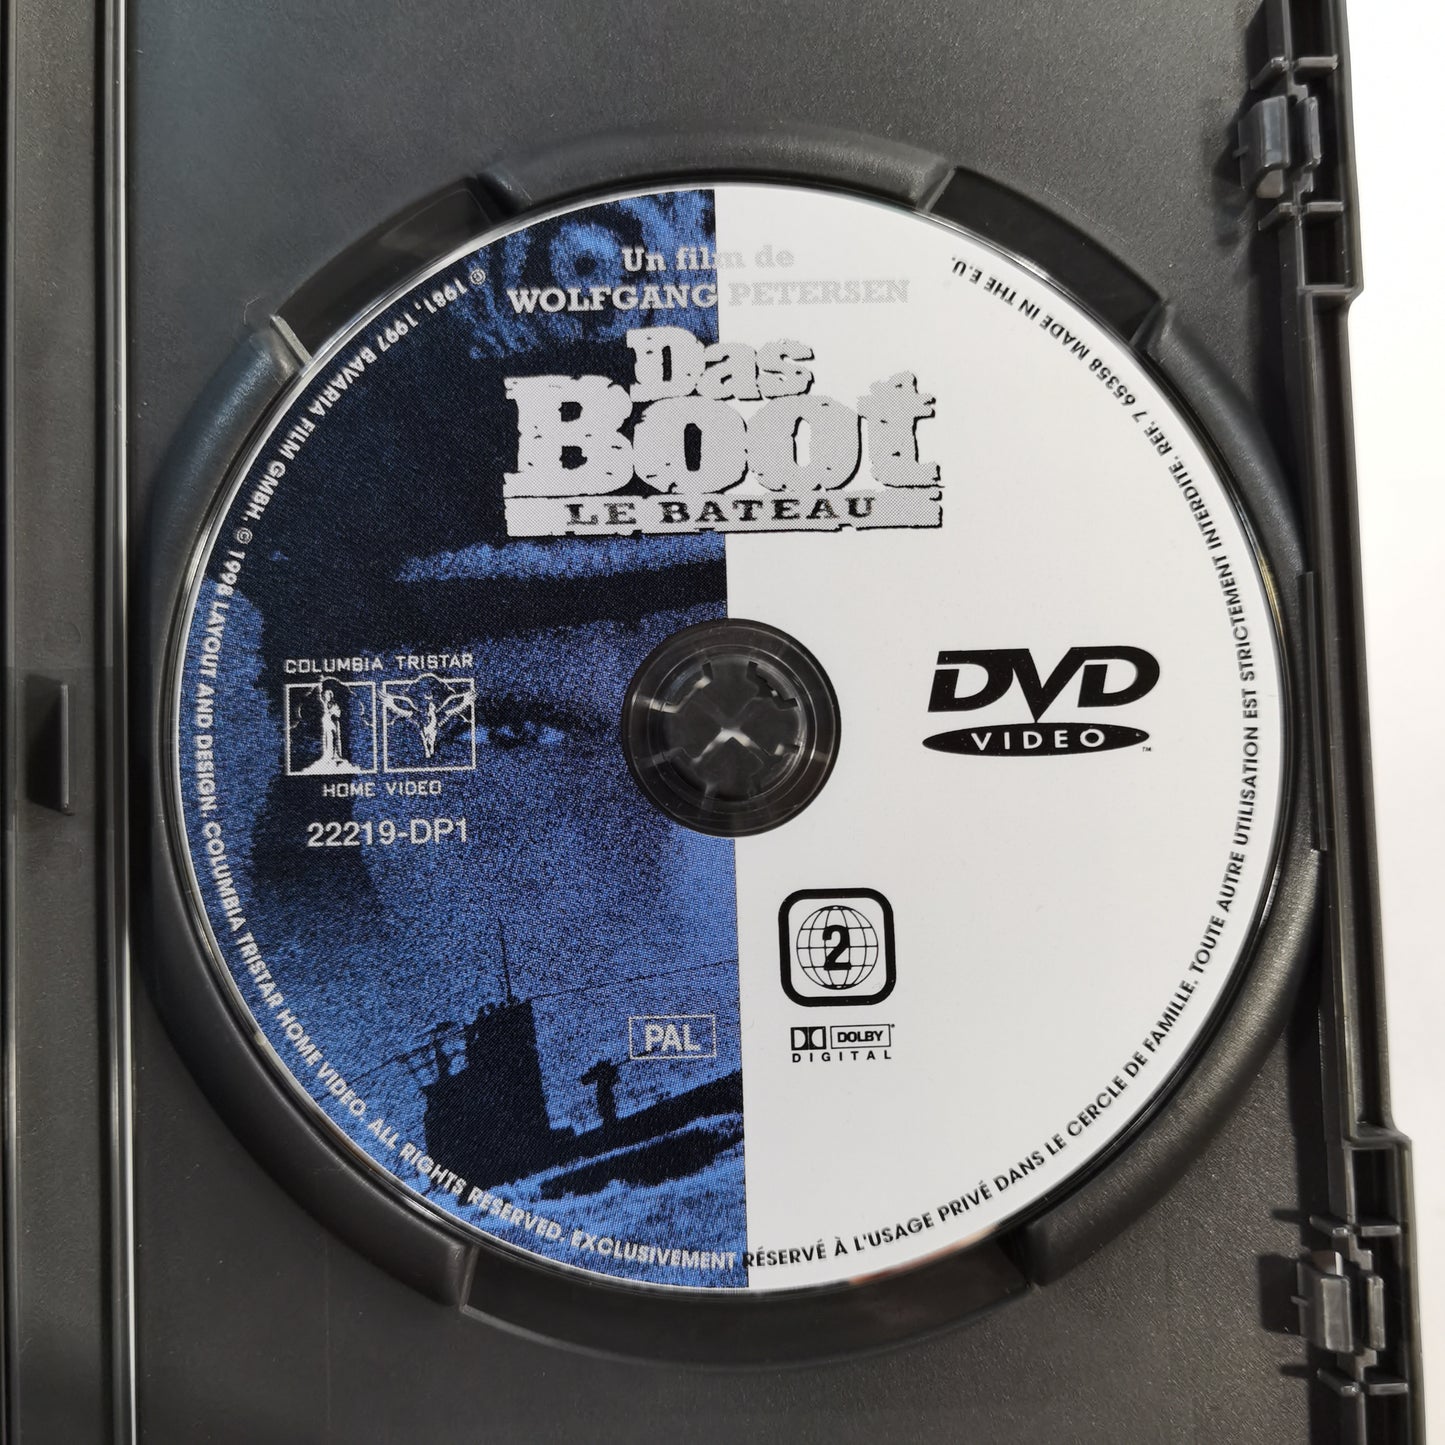 Das Boot (1981) - DVD SE 2003 The Director's Cut